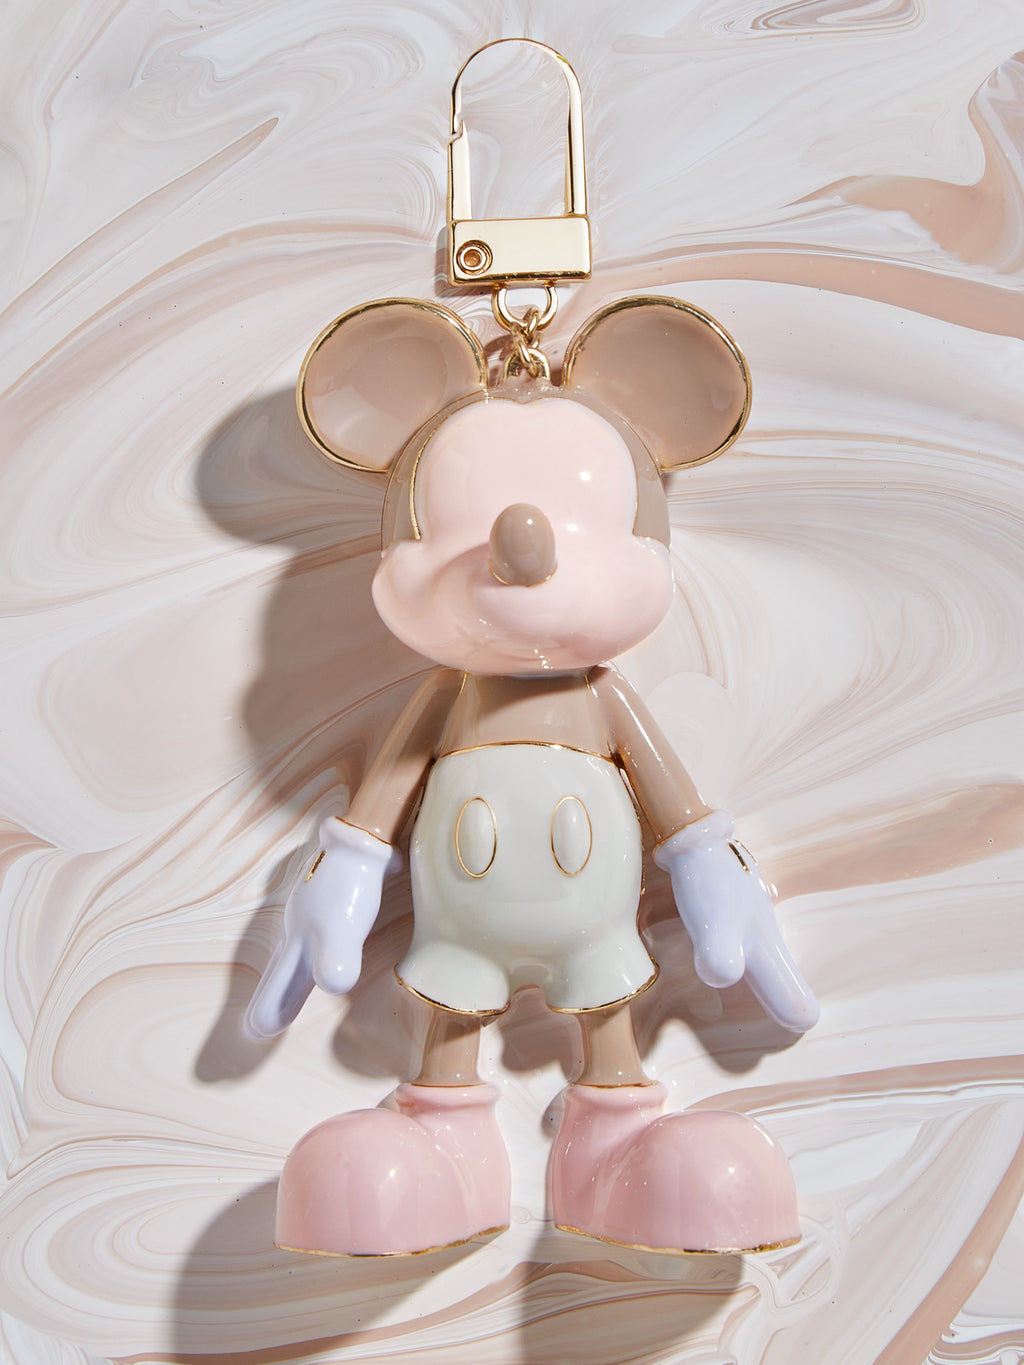 Baublebar Mickey Mouse Disney Bag Charm - Multicolored Enamel